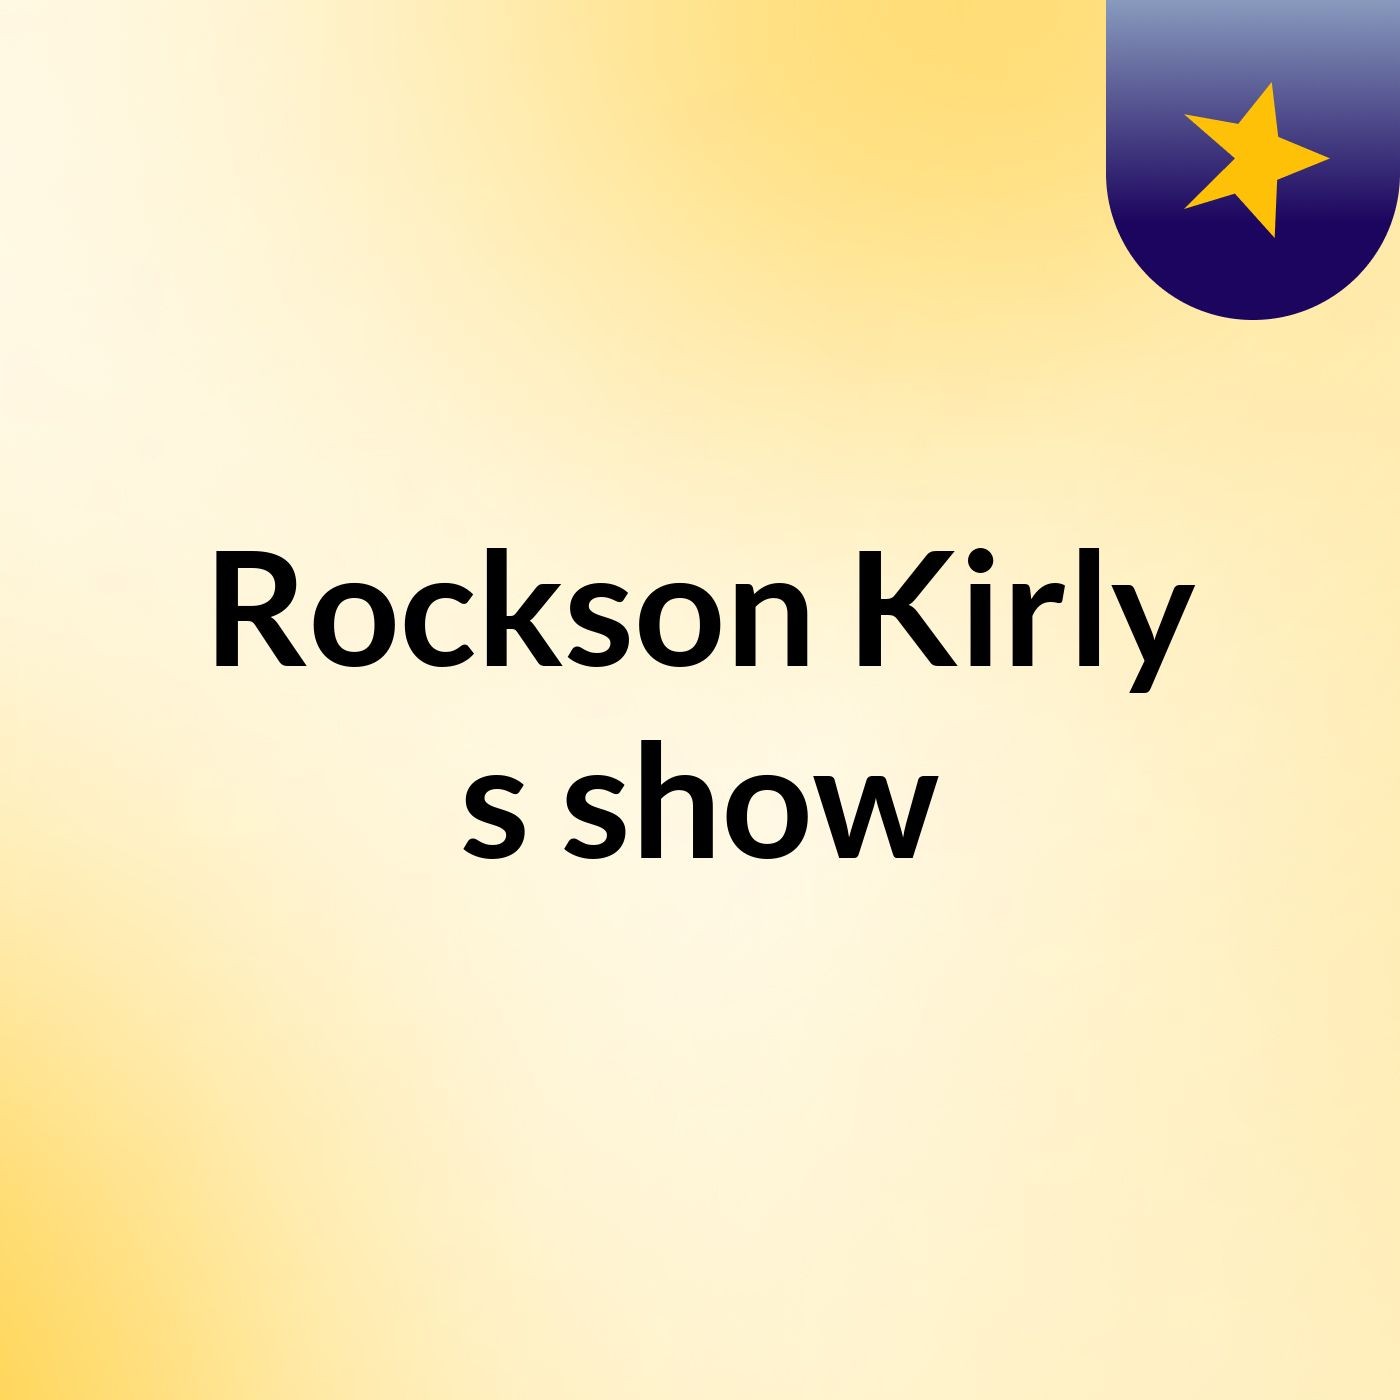 Rockson Kirly's show